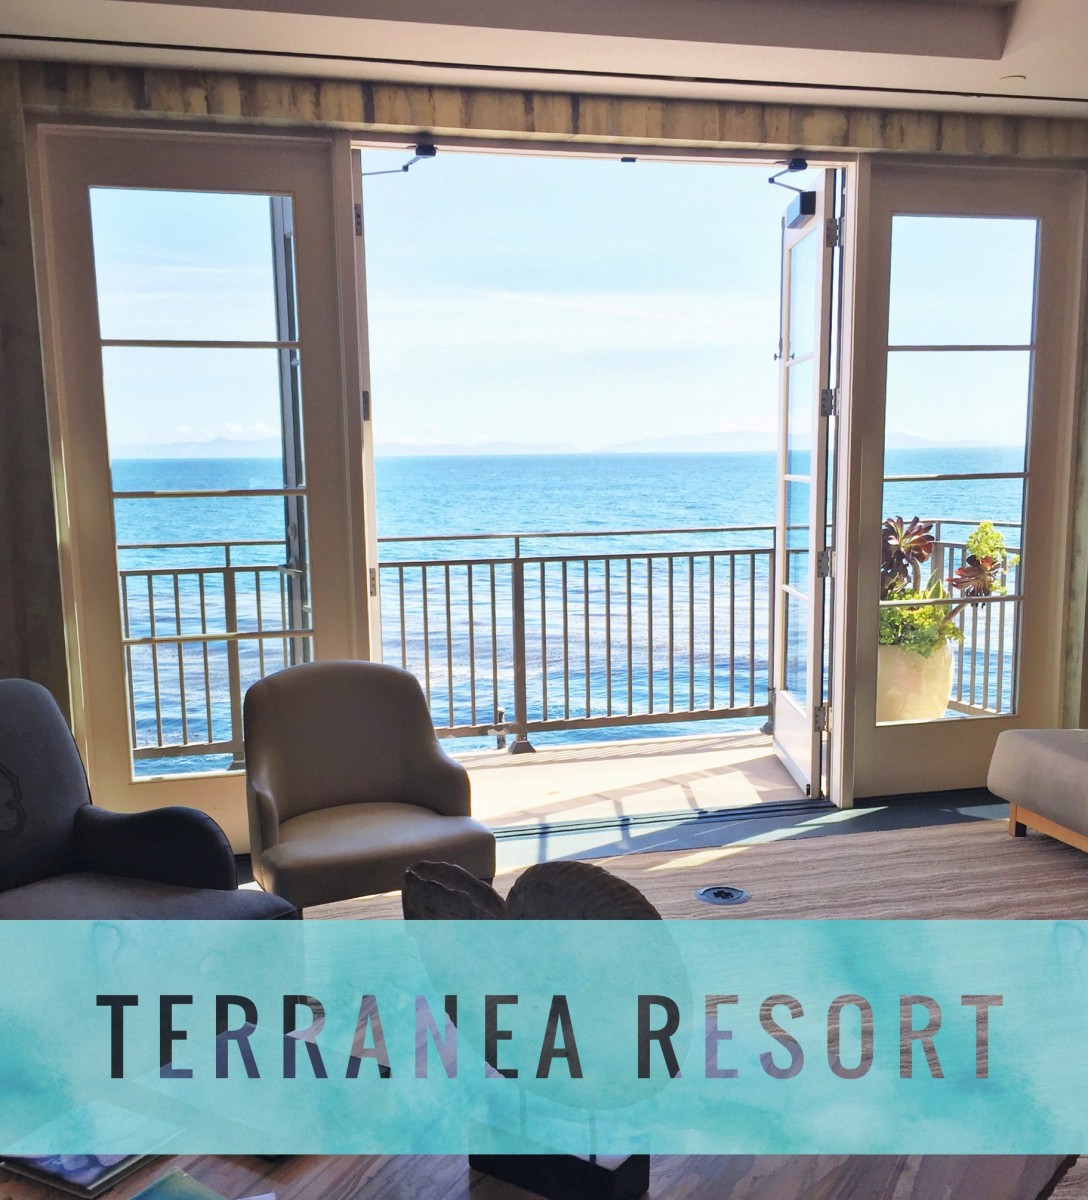 Terranea Resort Los Angeles California Her Heartland Soul